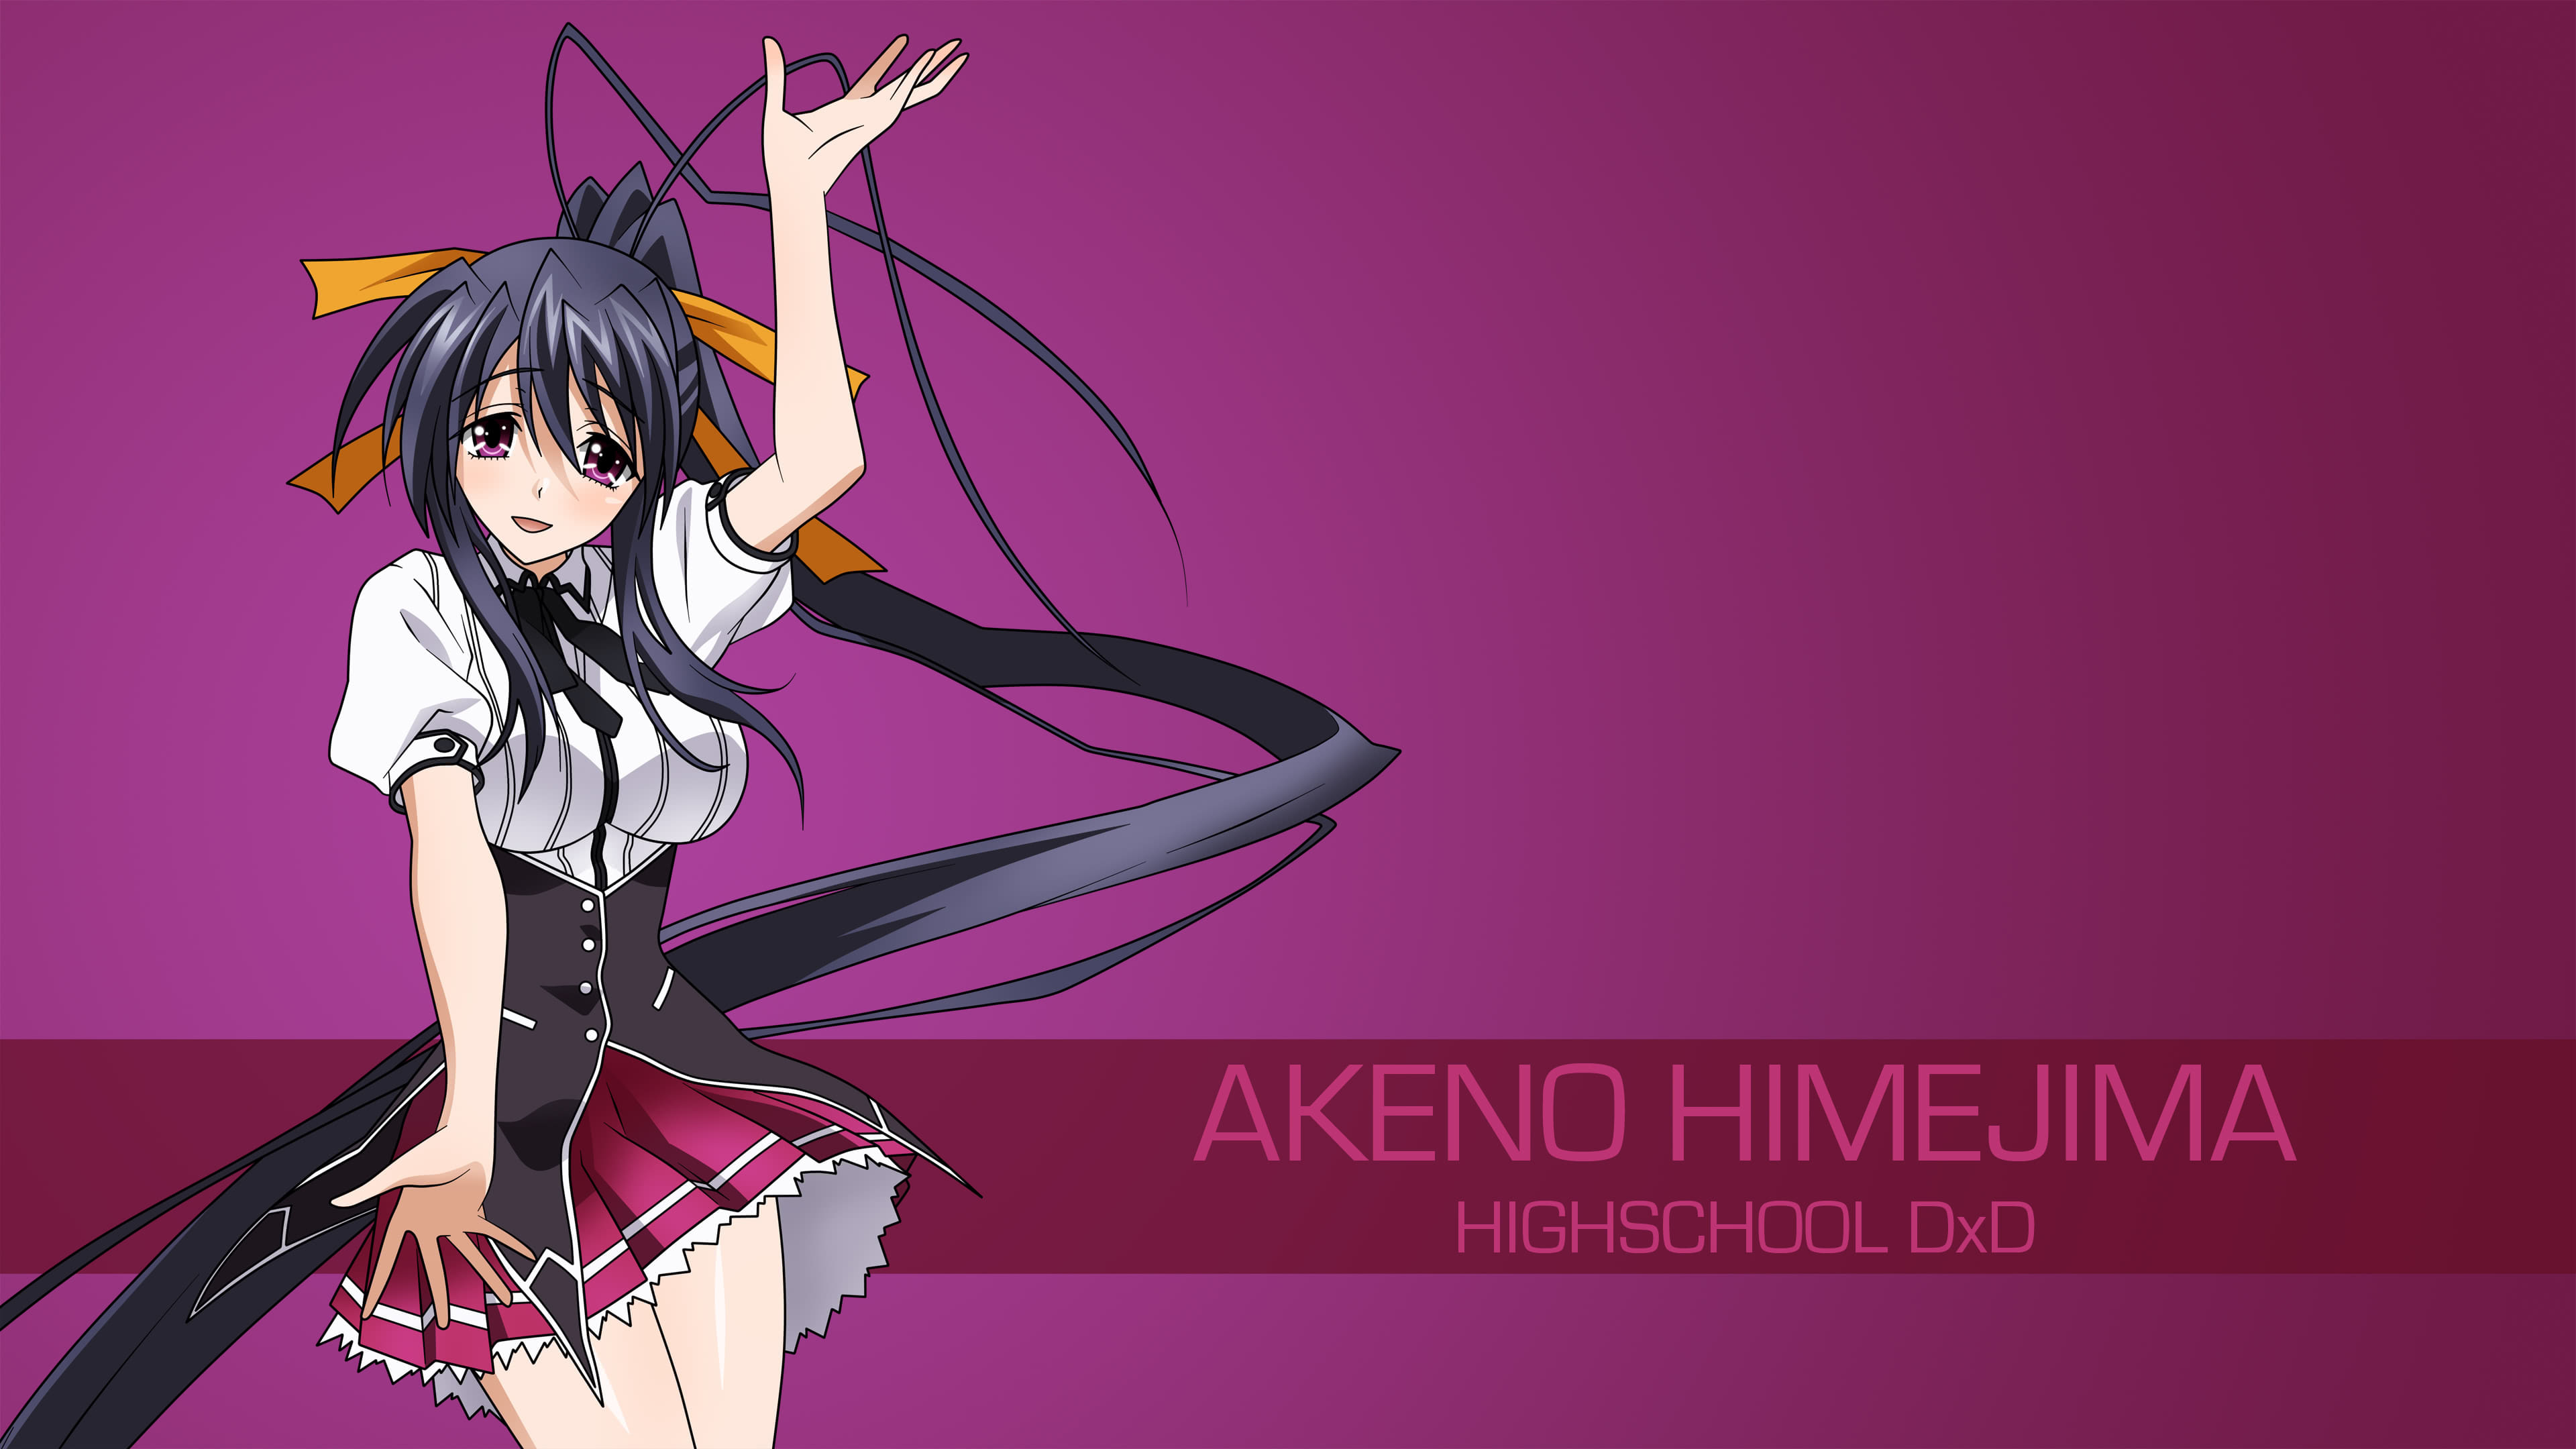 High School DxD (Akeno Himejima) - Minitokyo